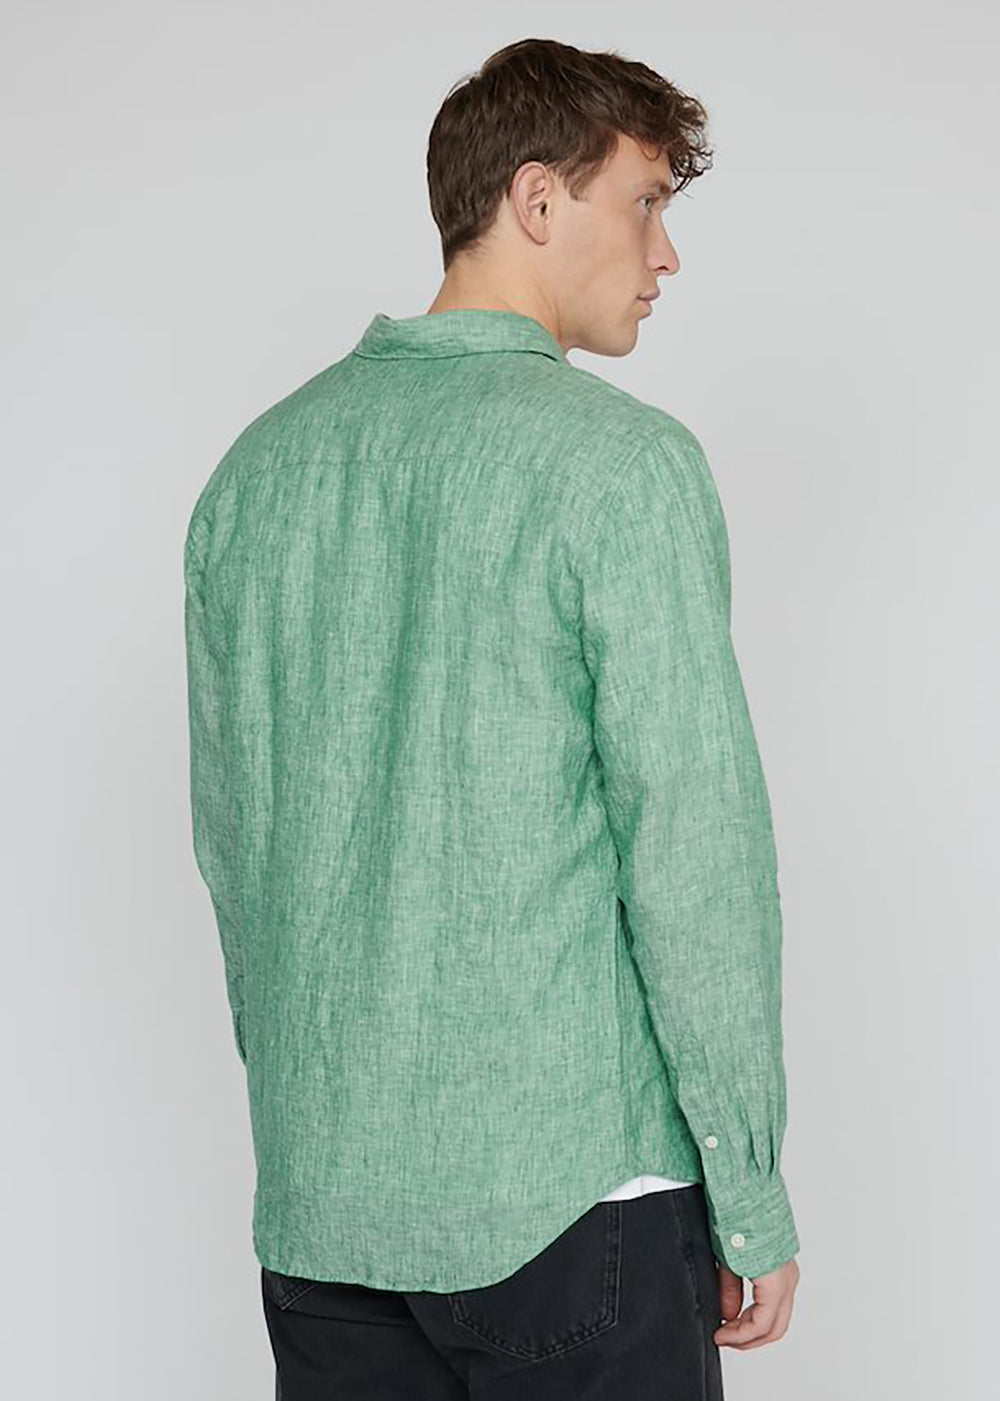 Marc Linen Long Sleeve Shirt - Pine Green - Matinique Canada - Danali